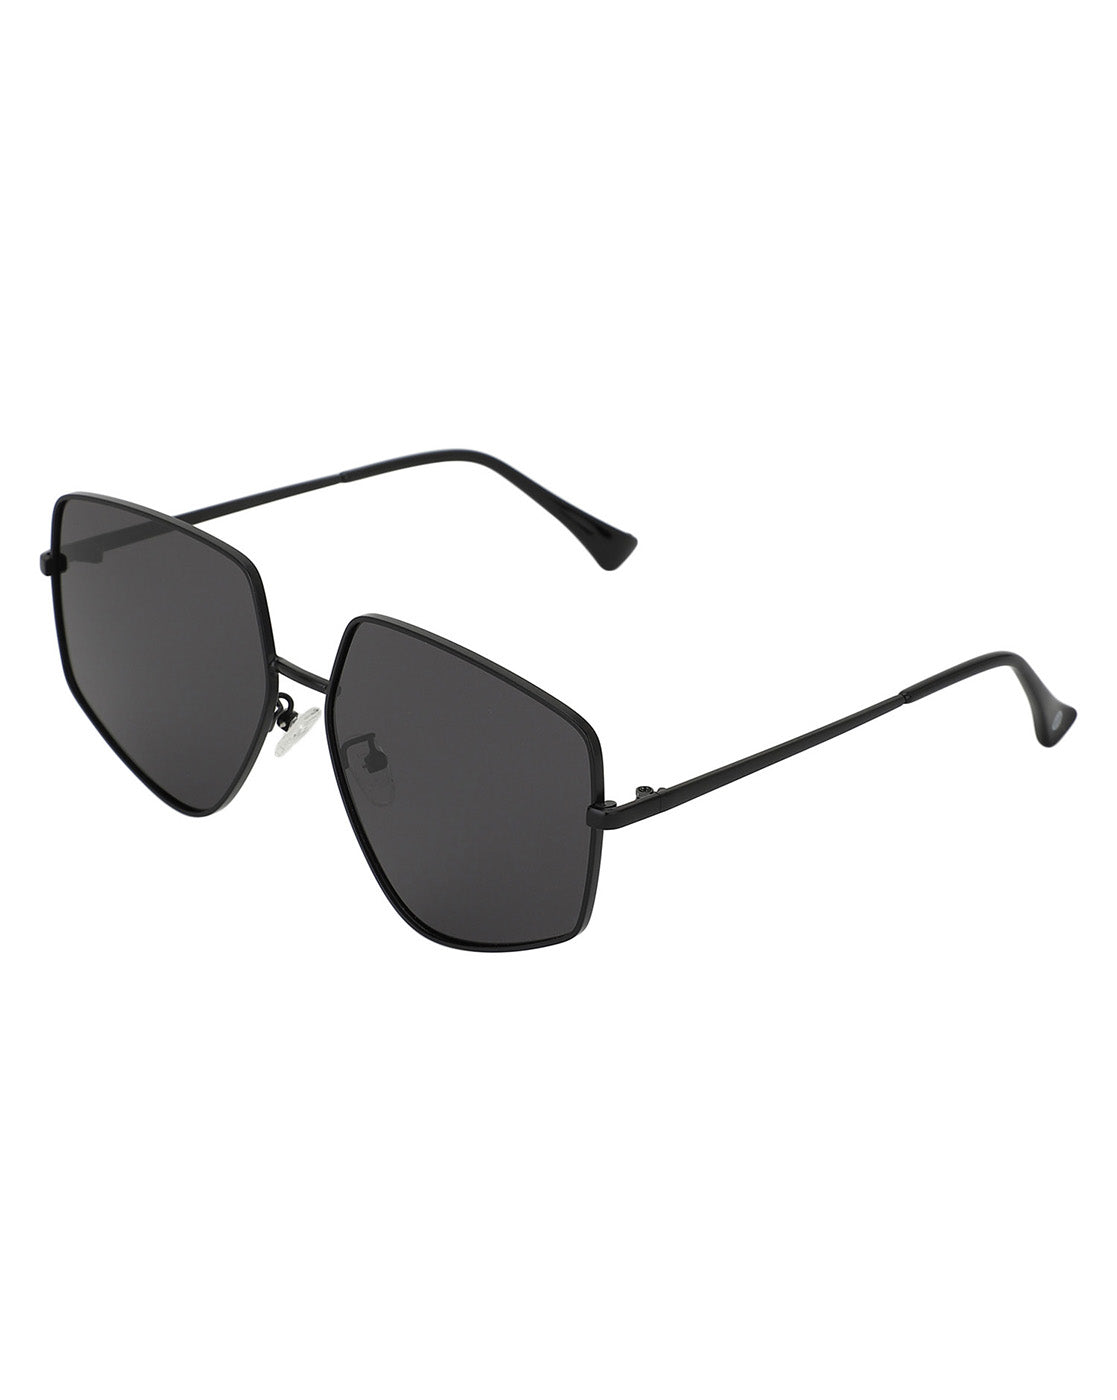 Carlton London Black Toned Black Polarised And Uv Protected Lens Unique/Distinctive Sunglasses For Women